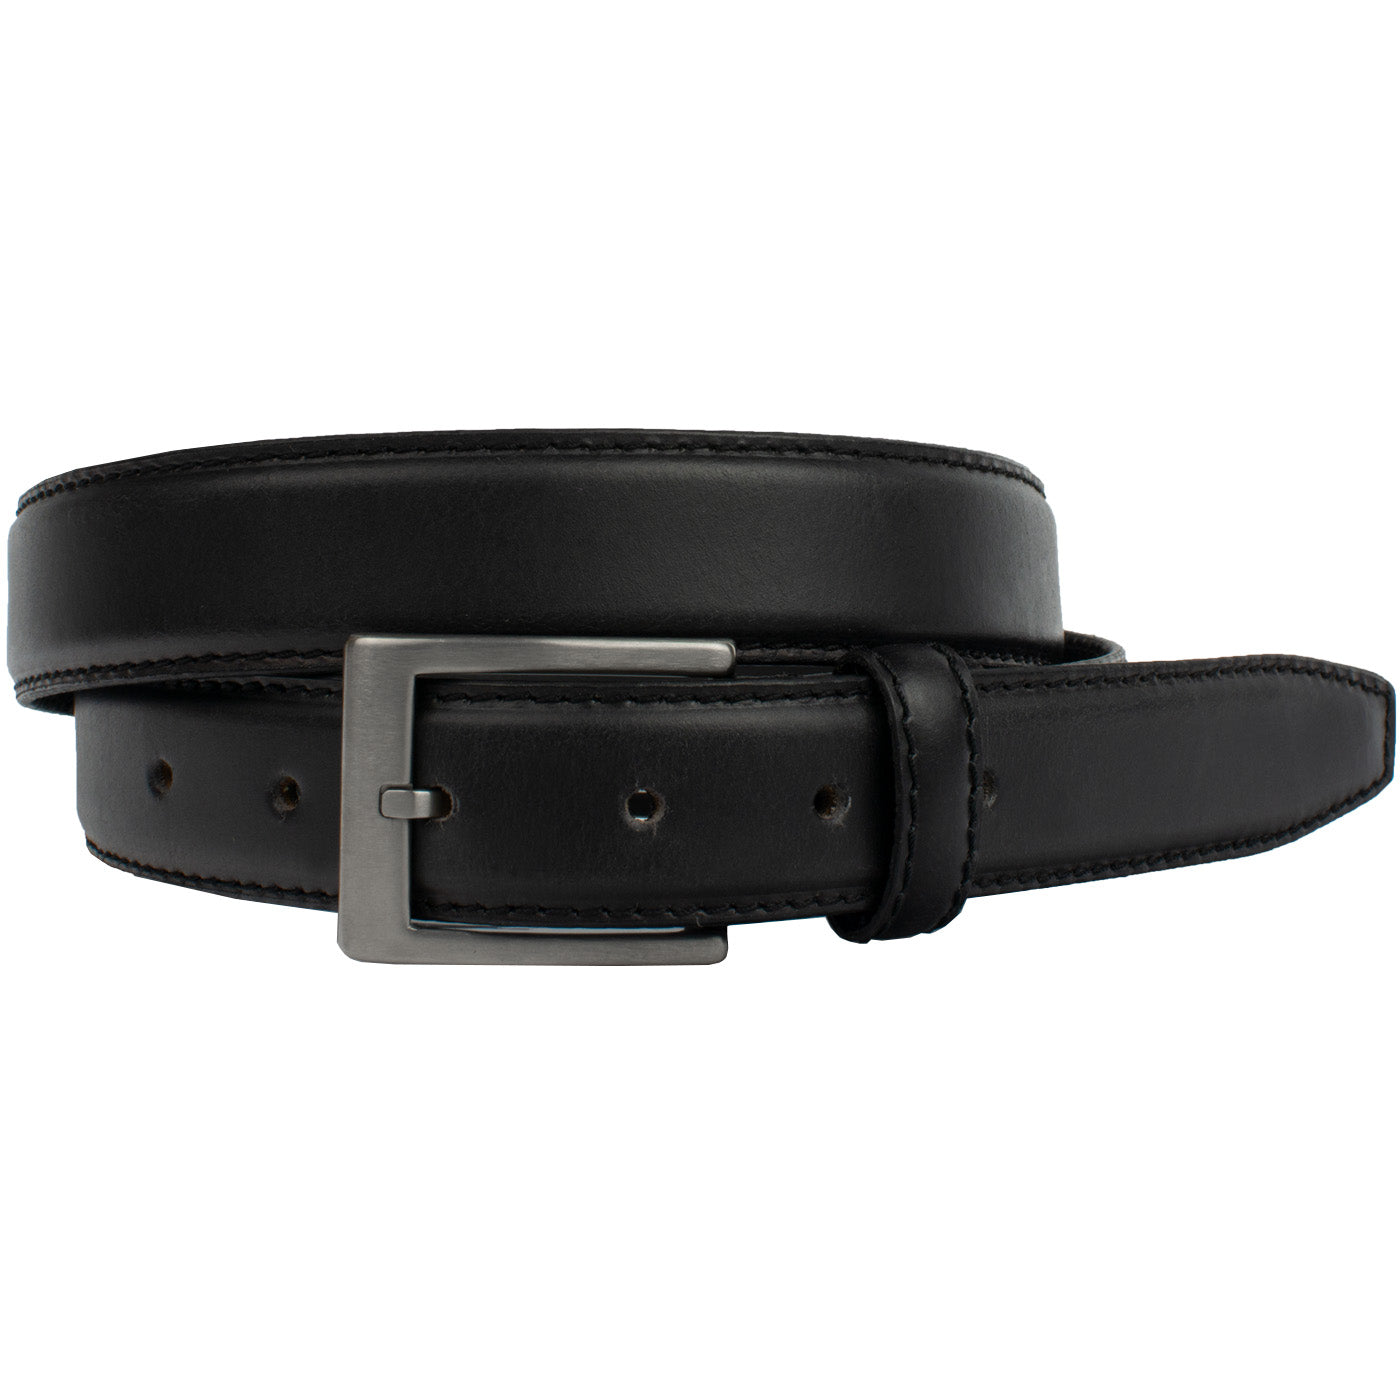 Silver square solid brass buckle (short) - black leather belt - 4cm width